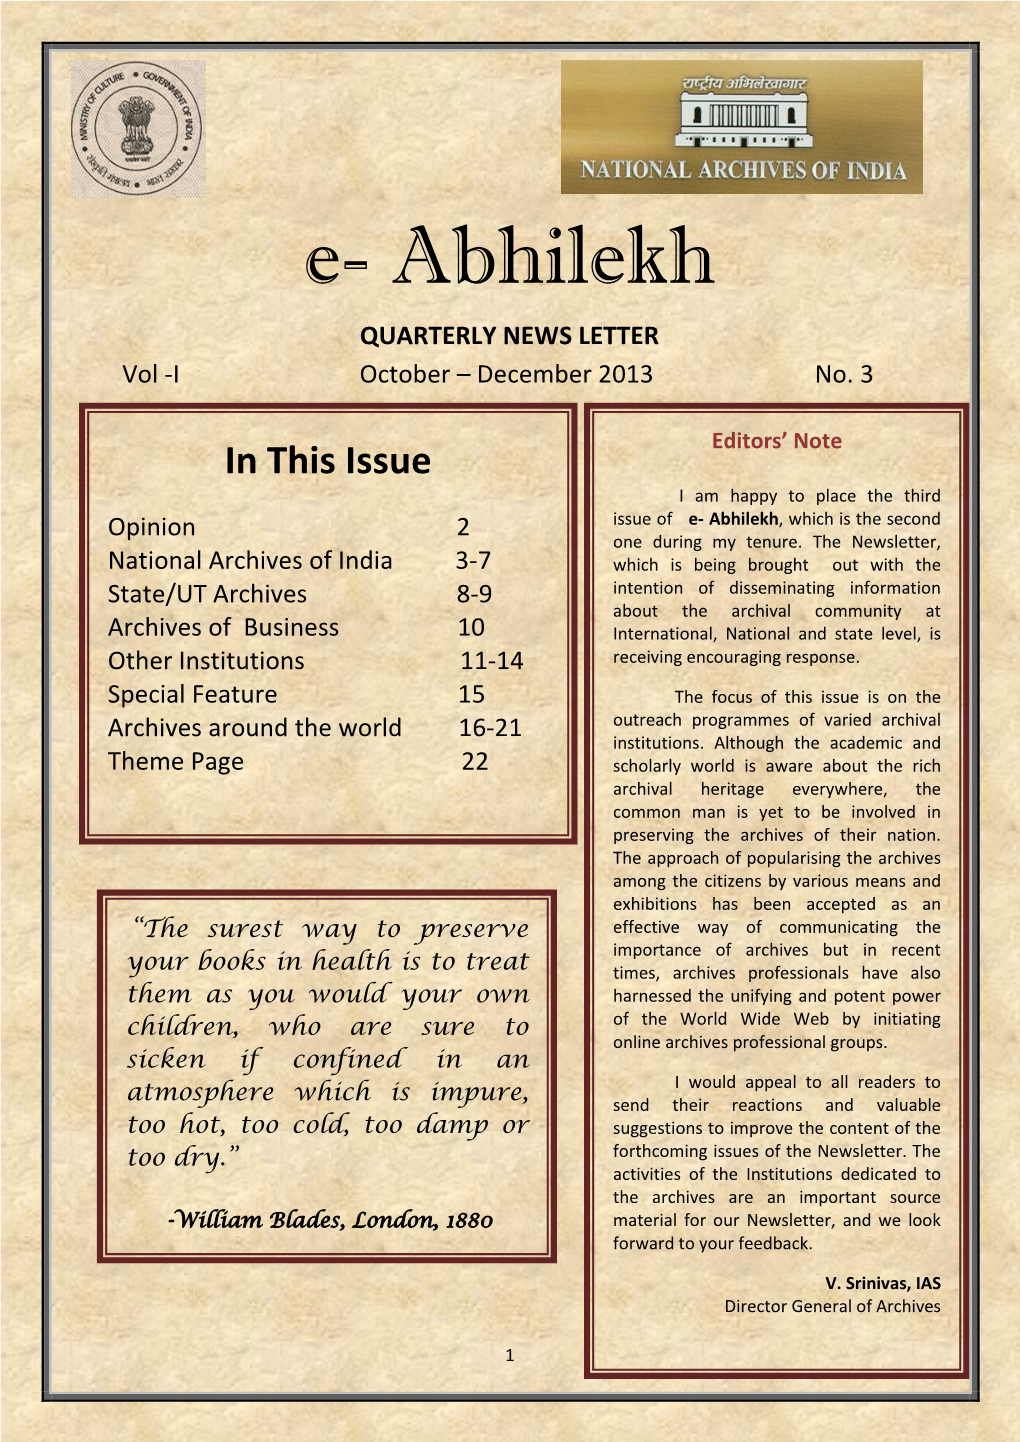 Abhilekh QUARTERLY NEWS LETTER Vol -I October – December 2013 No